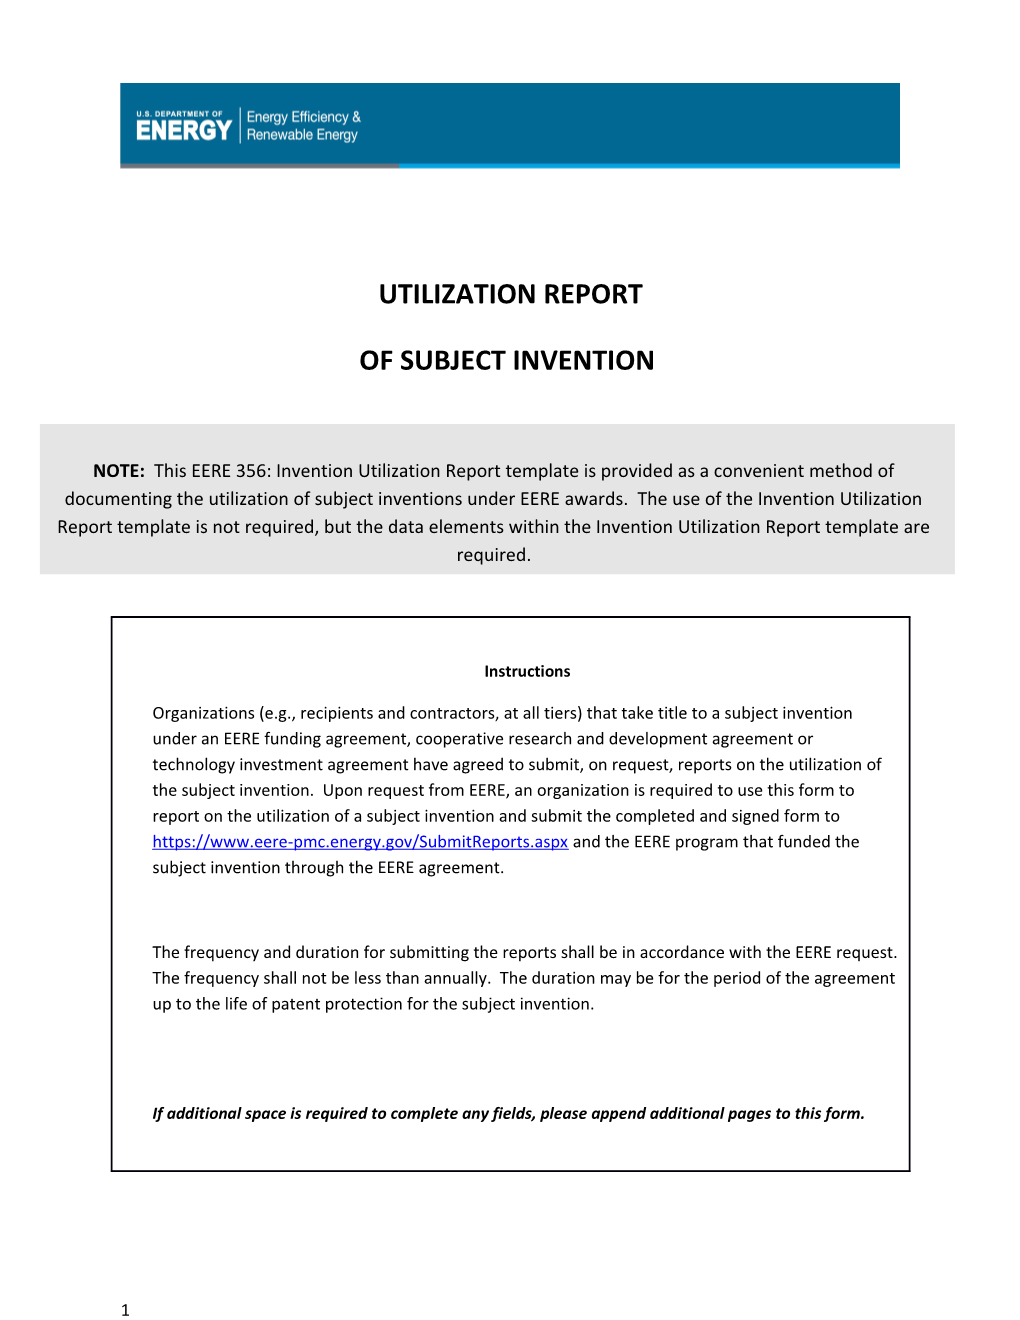 Invention Utilization Report, EERE 356